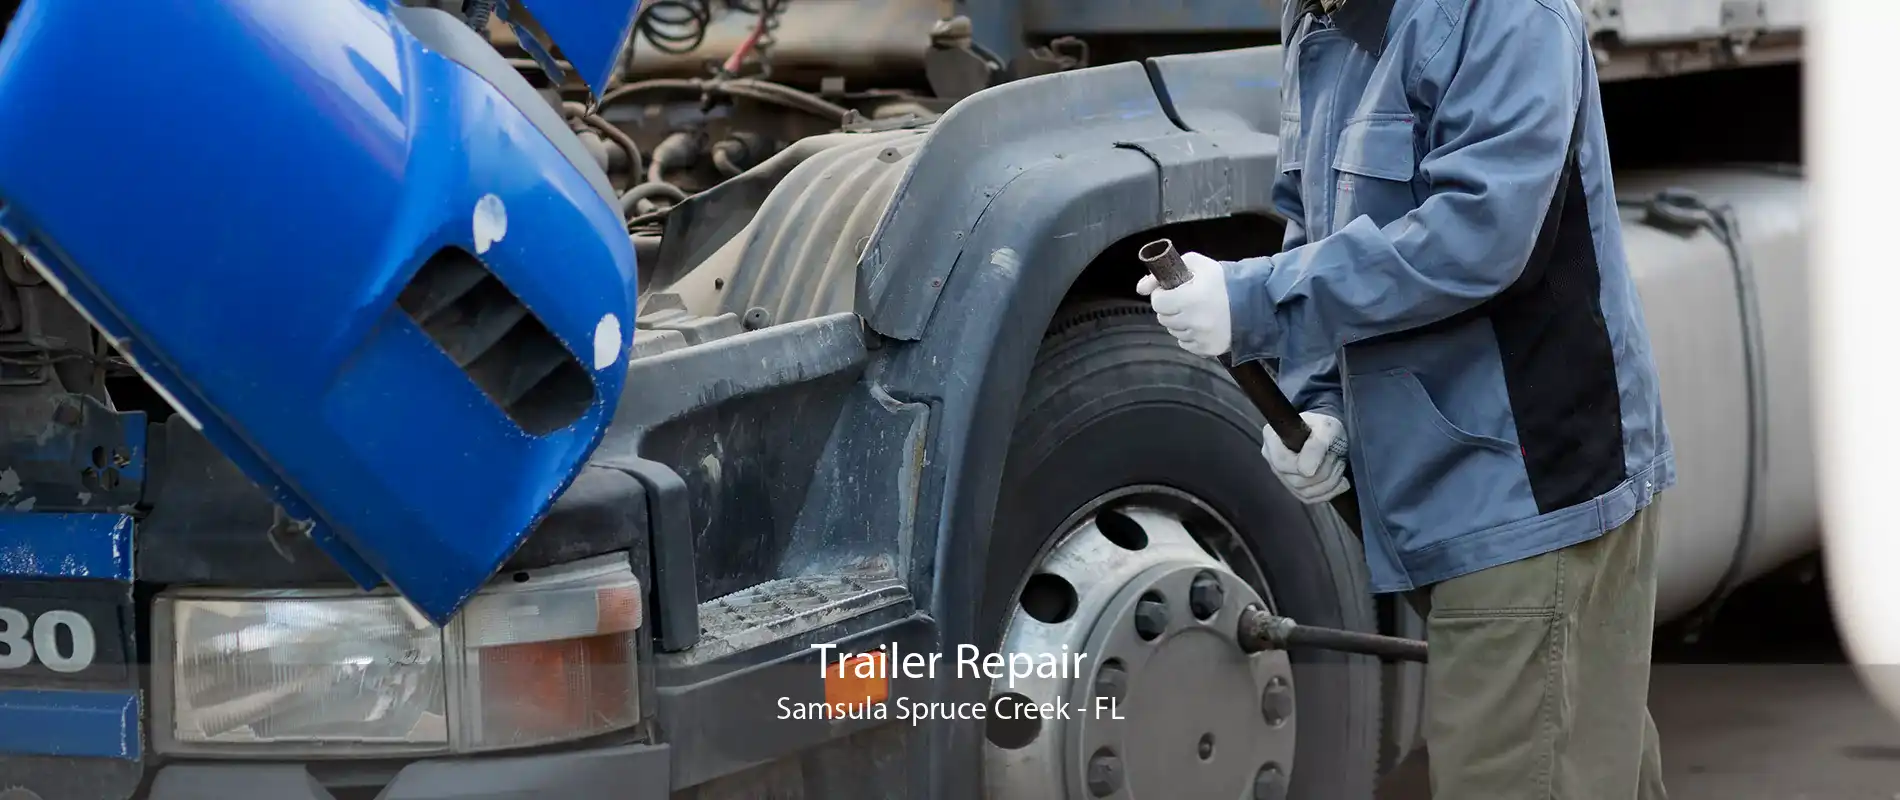 Trailer Repair Samsula Spruce Creek - FL